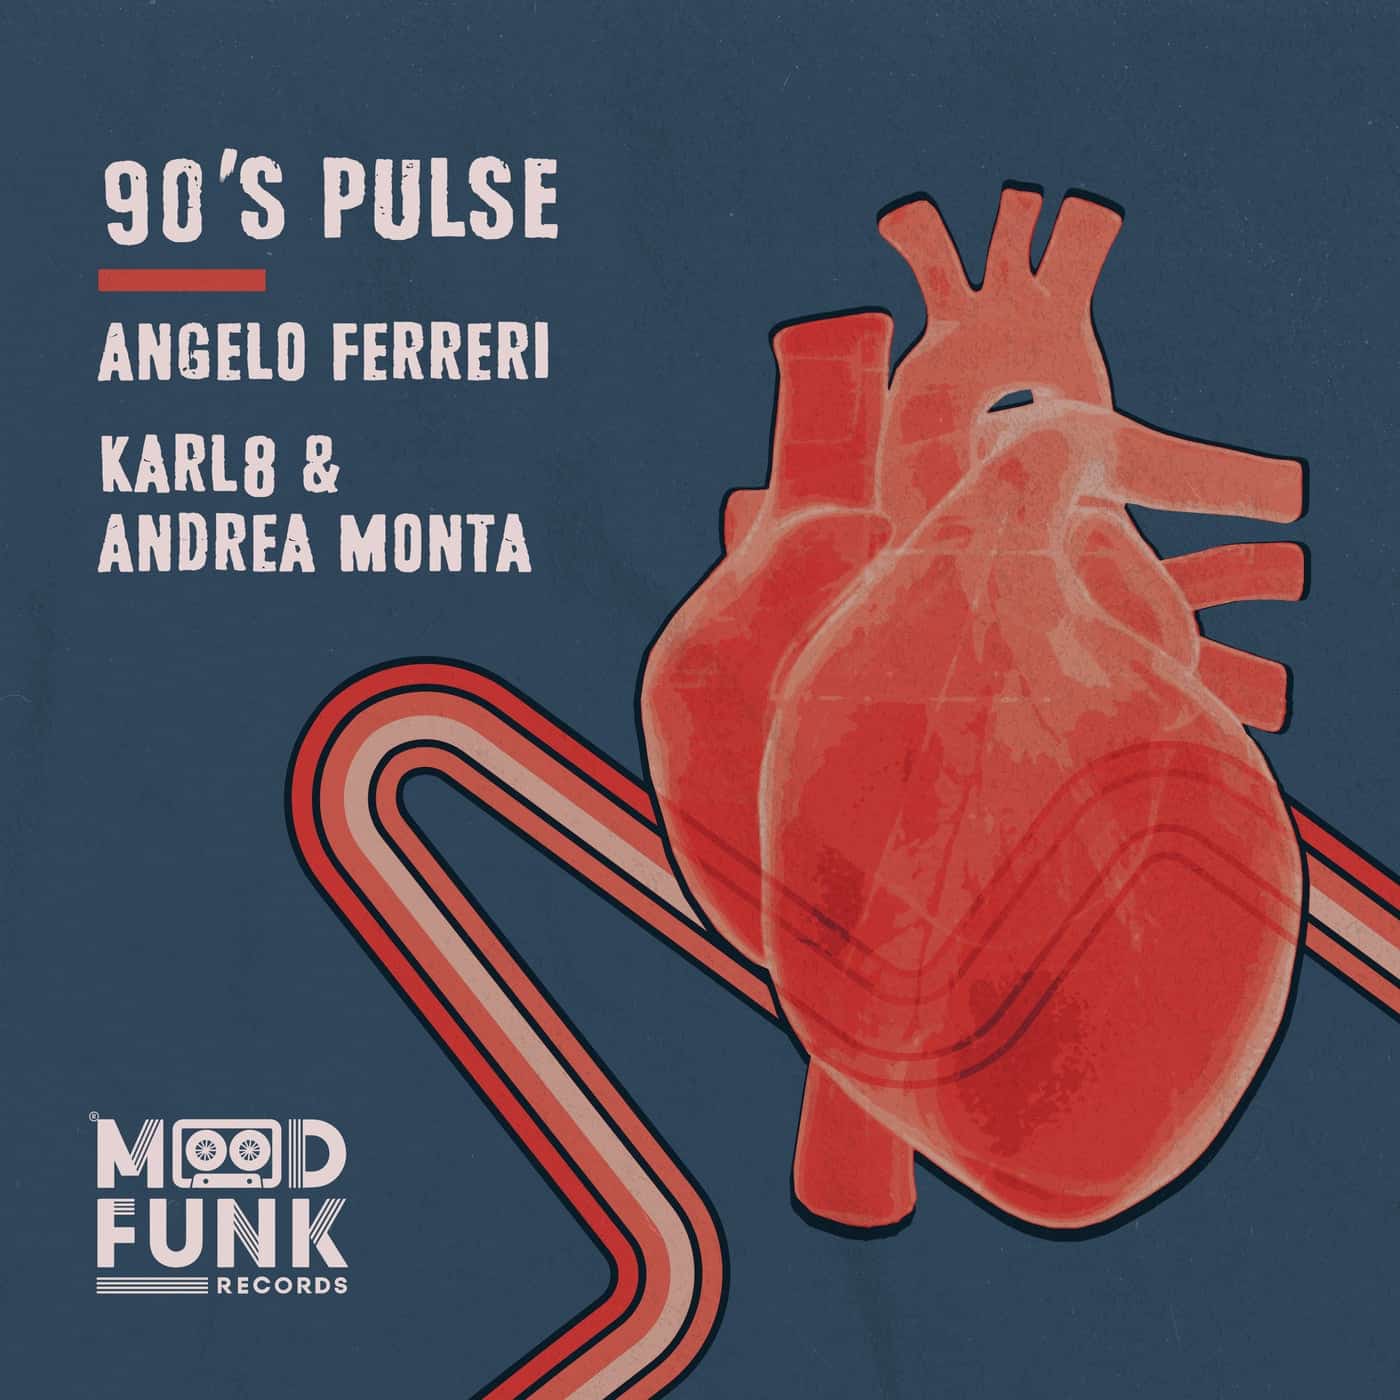 image cover: Angelo Ferreri, Karl8 & Andrea Monta - 90's Pulse on Mood Funk Records